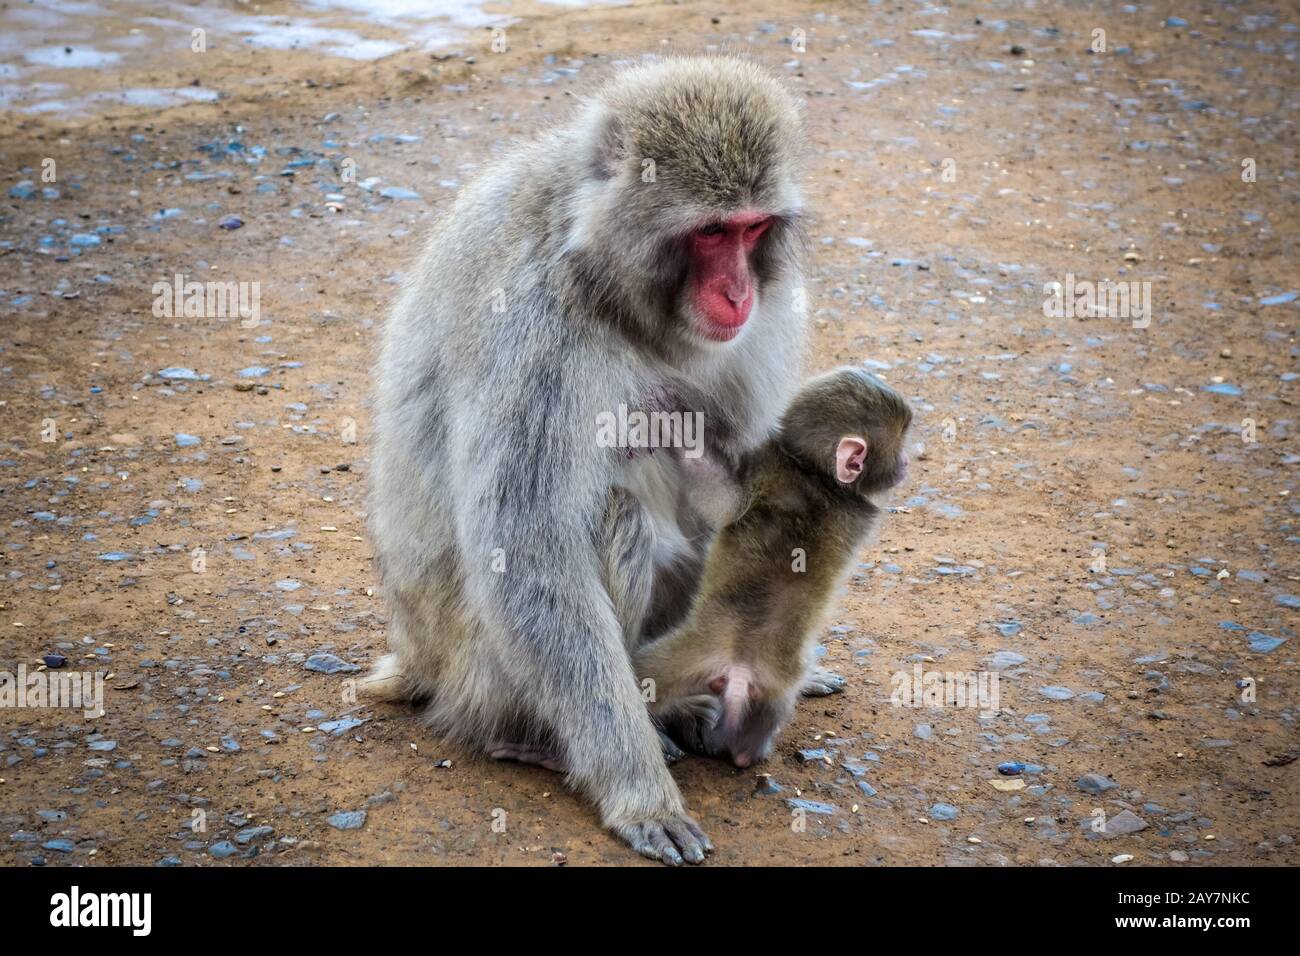 macaco japonés o mono de nieve con bebé 6965989 Foto de stock en Vecteezy